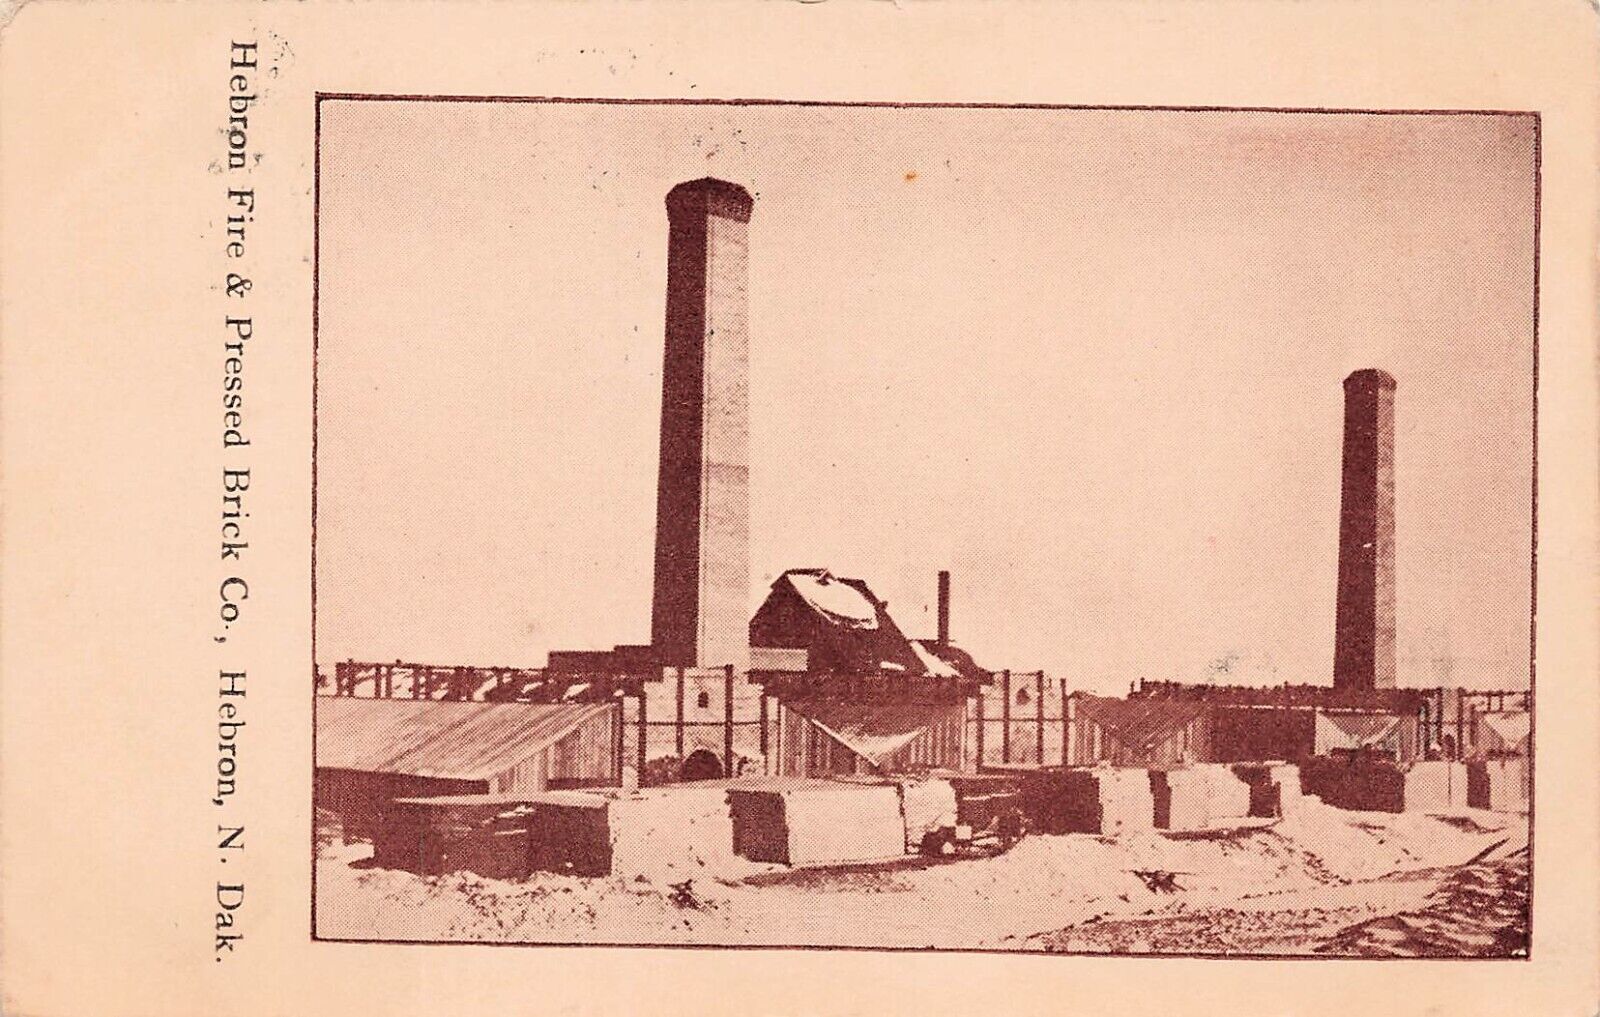 Hebron ND North Dakota Fire Pressed Brick Company Plant c1905 Vtg Postcard C13